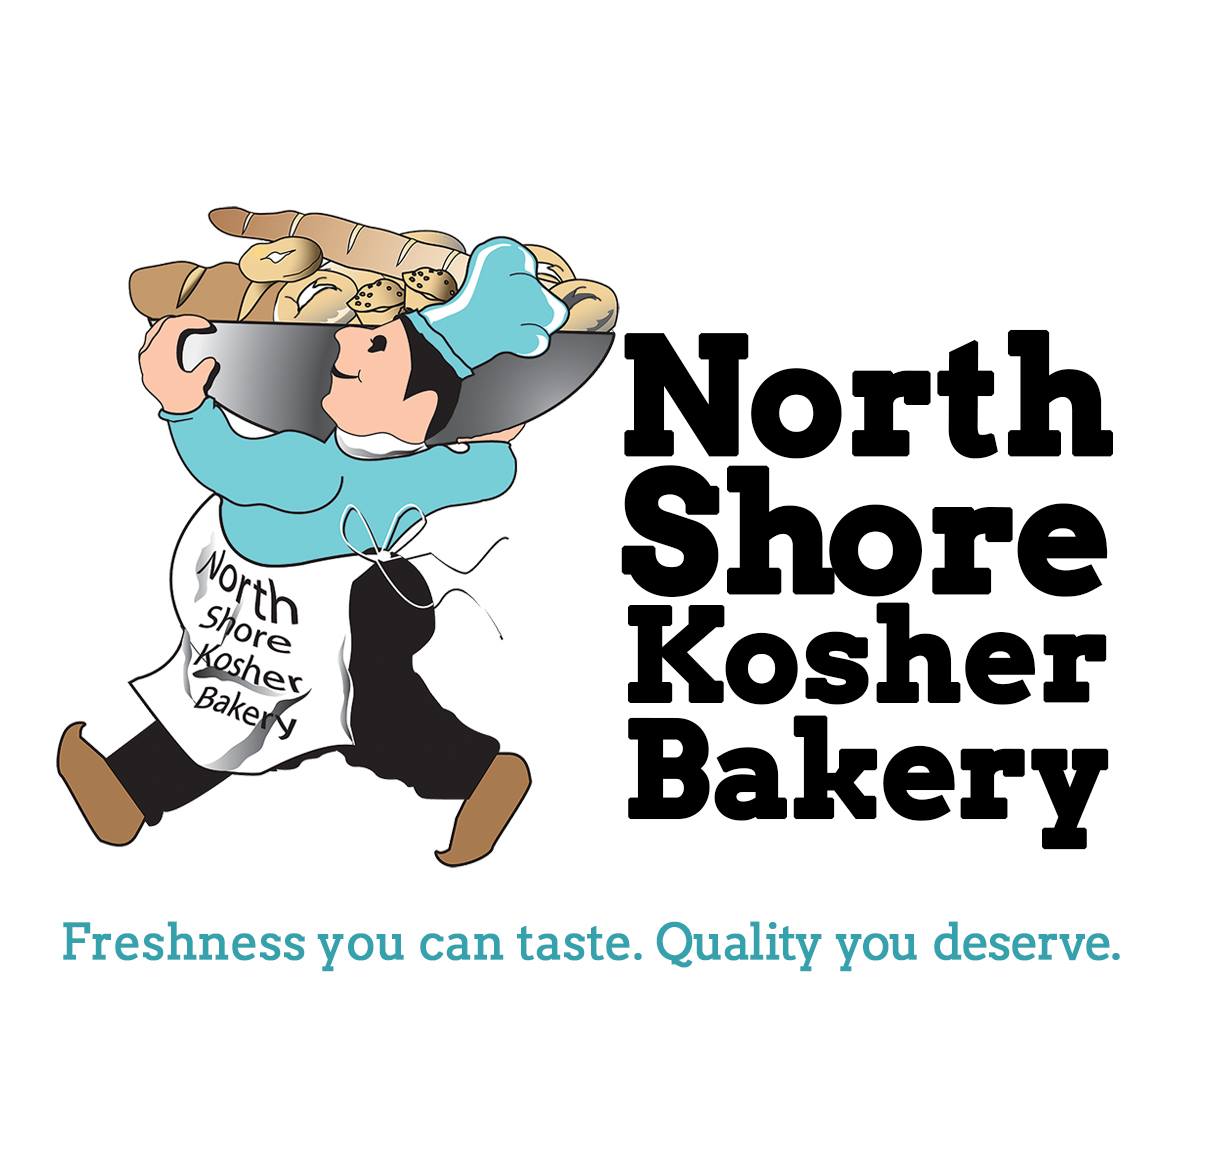 North Shore Kosher Bakery Chicago